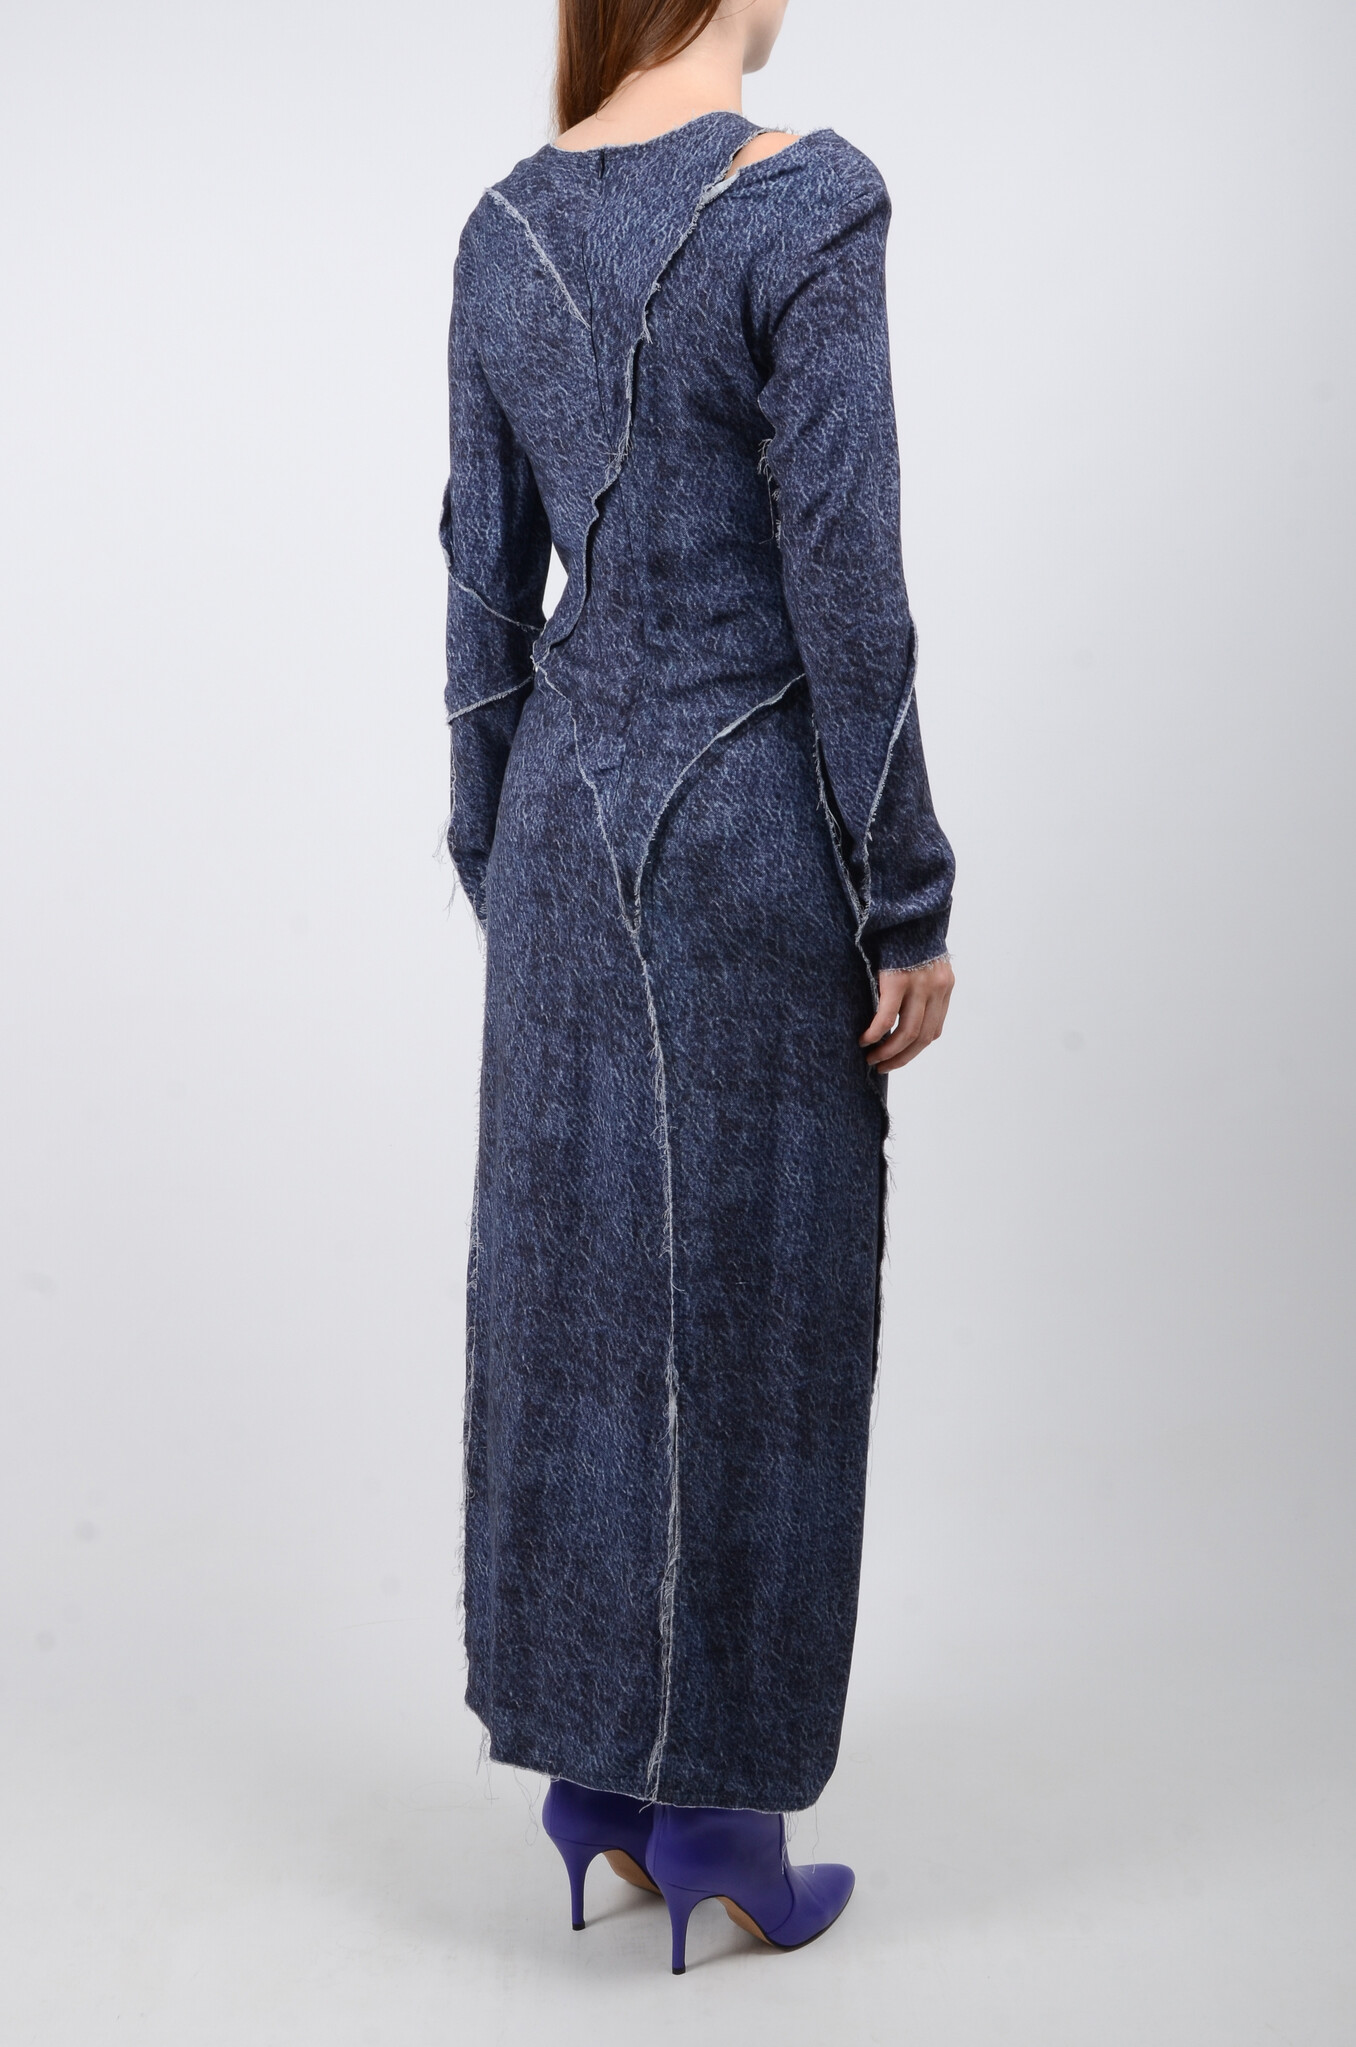 Rosalia Patchwork Dress-5